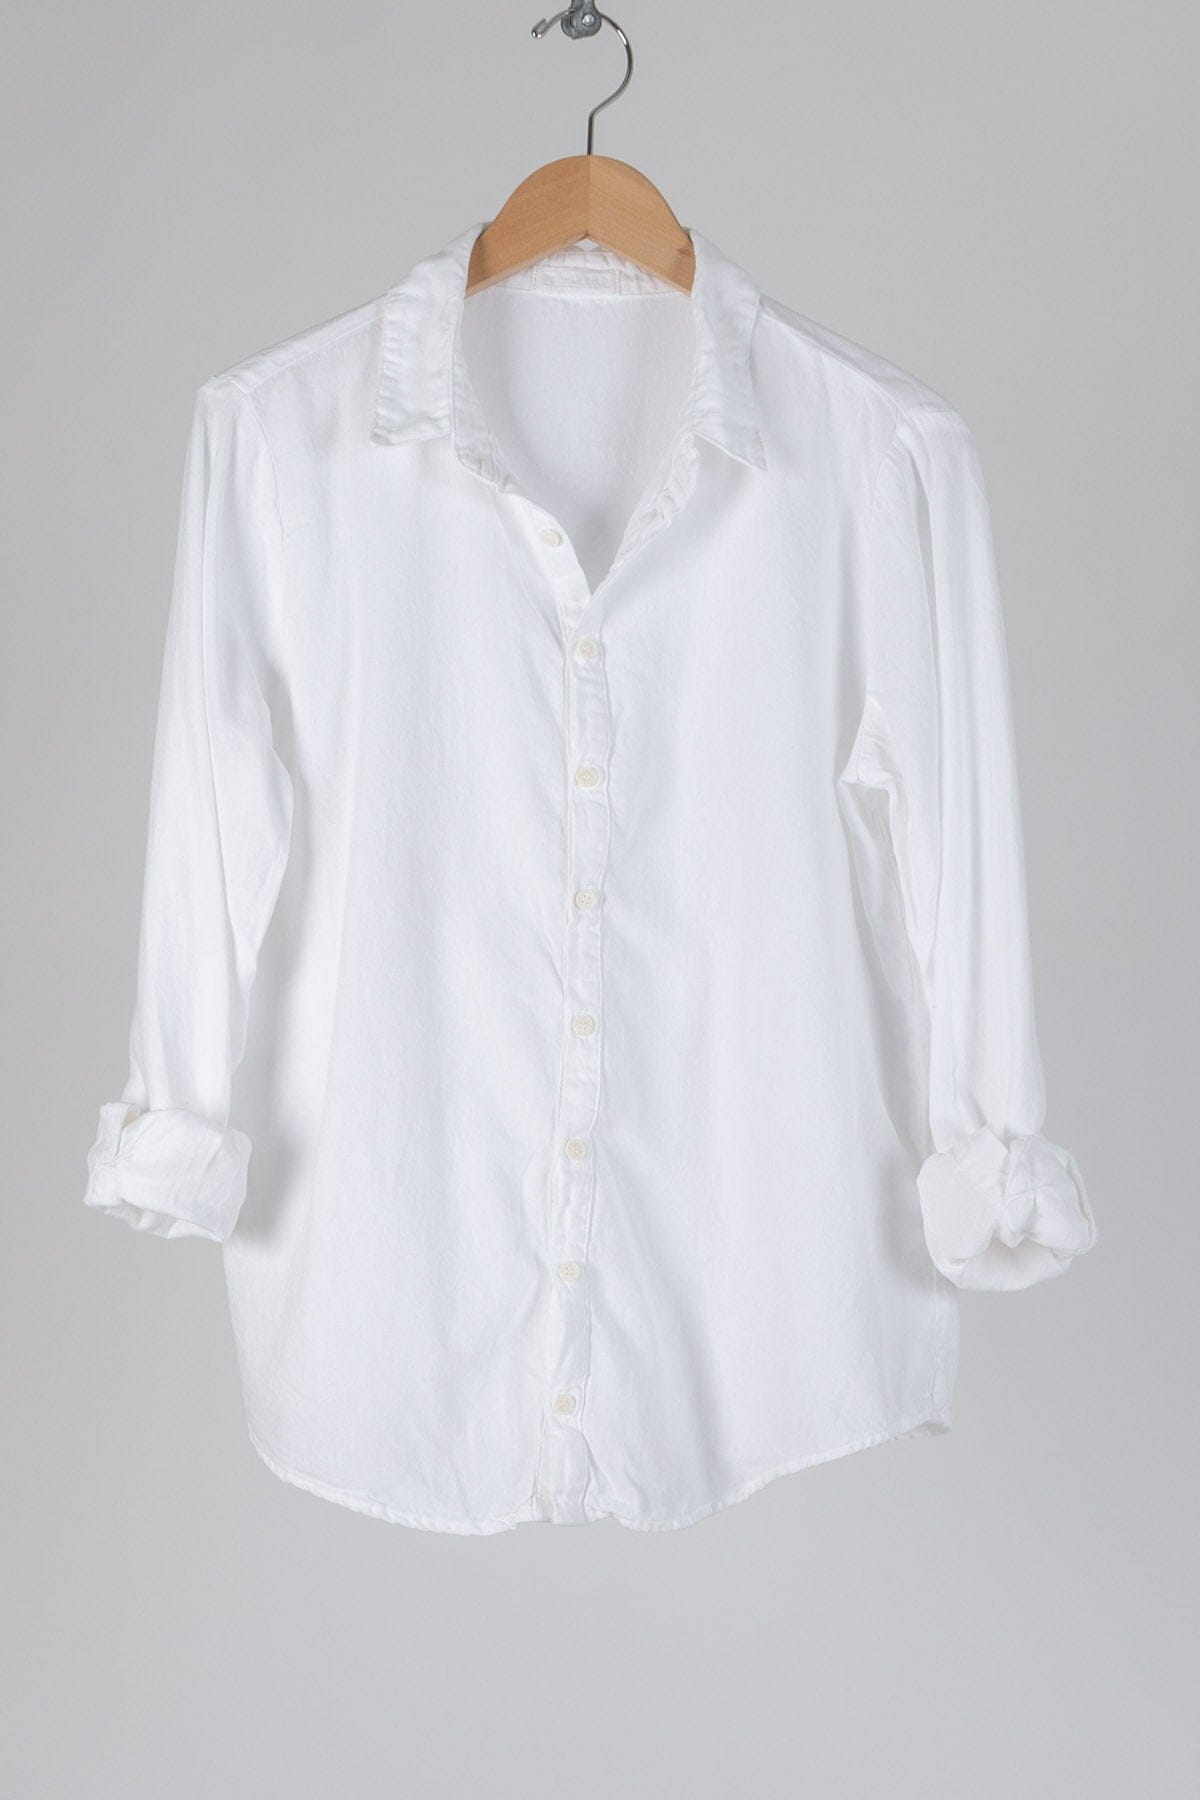 Romy - Textured Cotton S90 - 4269 Sale CP Shades white 4269